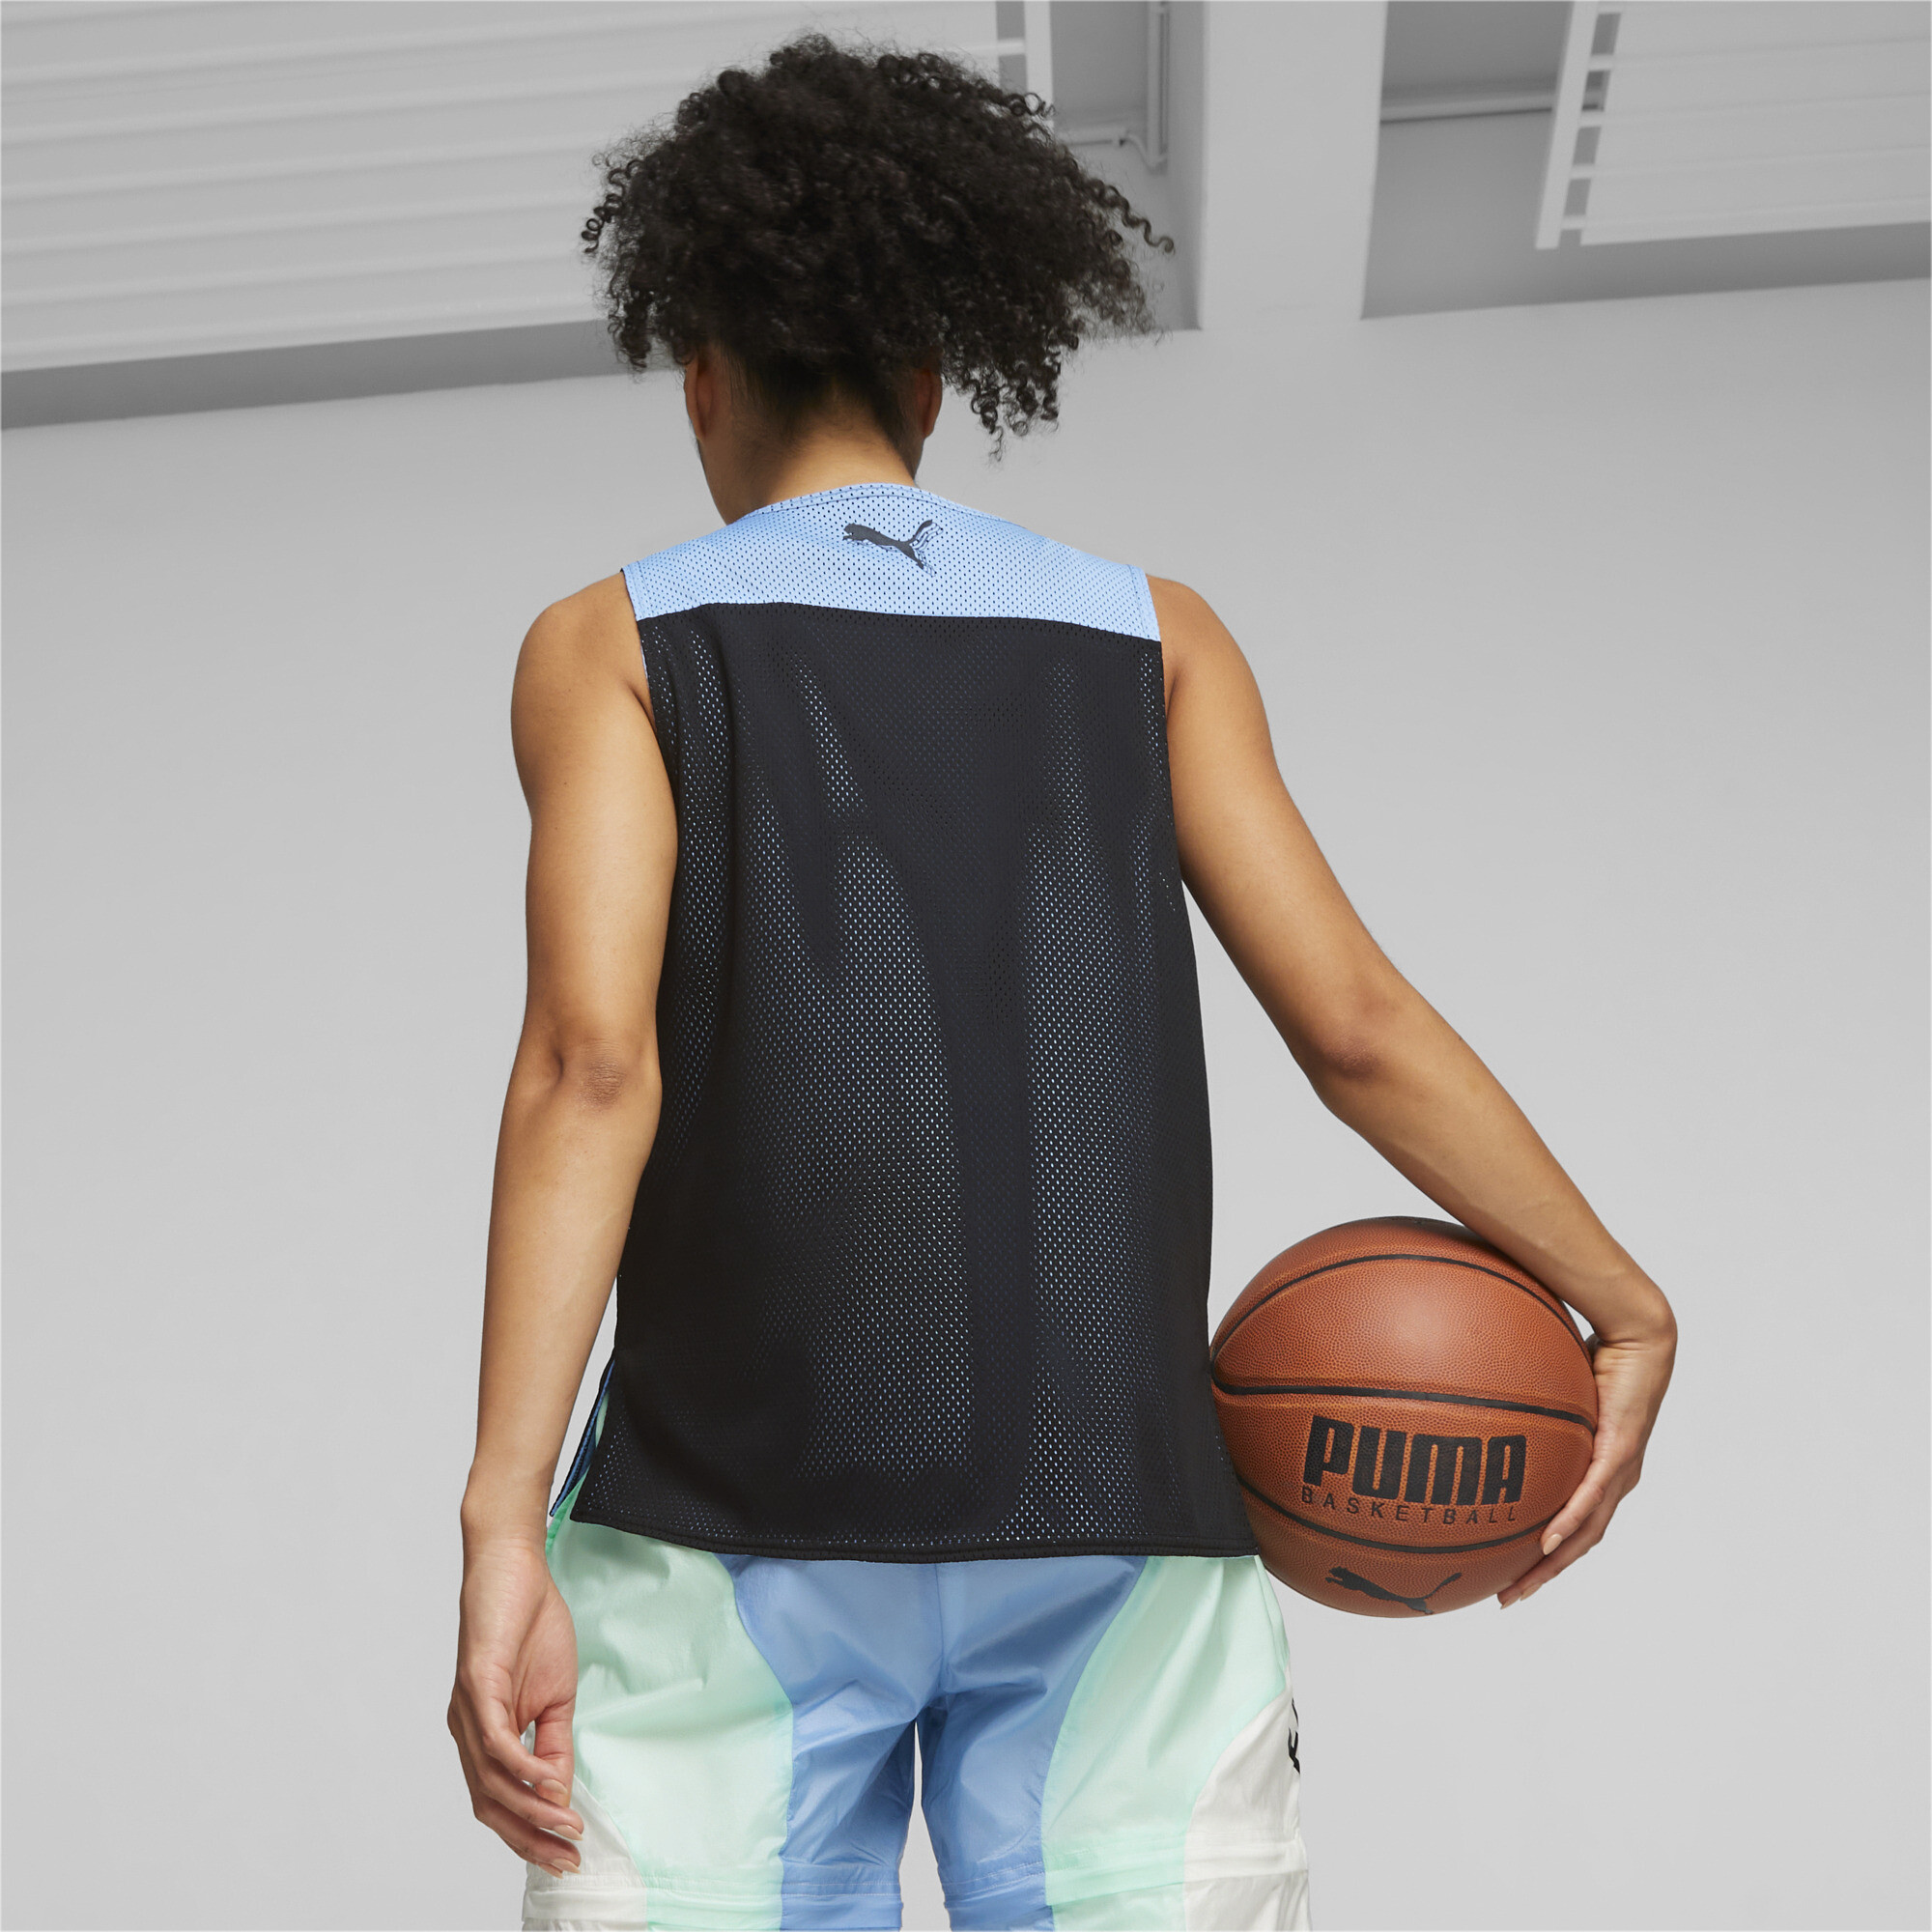 Women's Puma STEWIE X WATER's Basketball Jersey, Black, Size L, Clothing